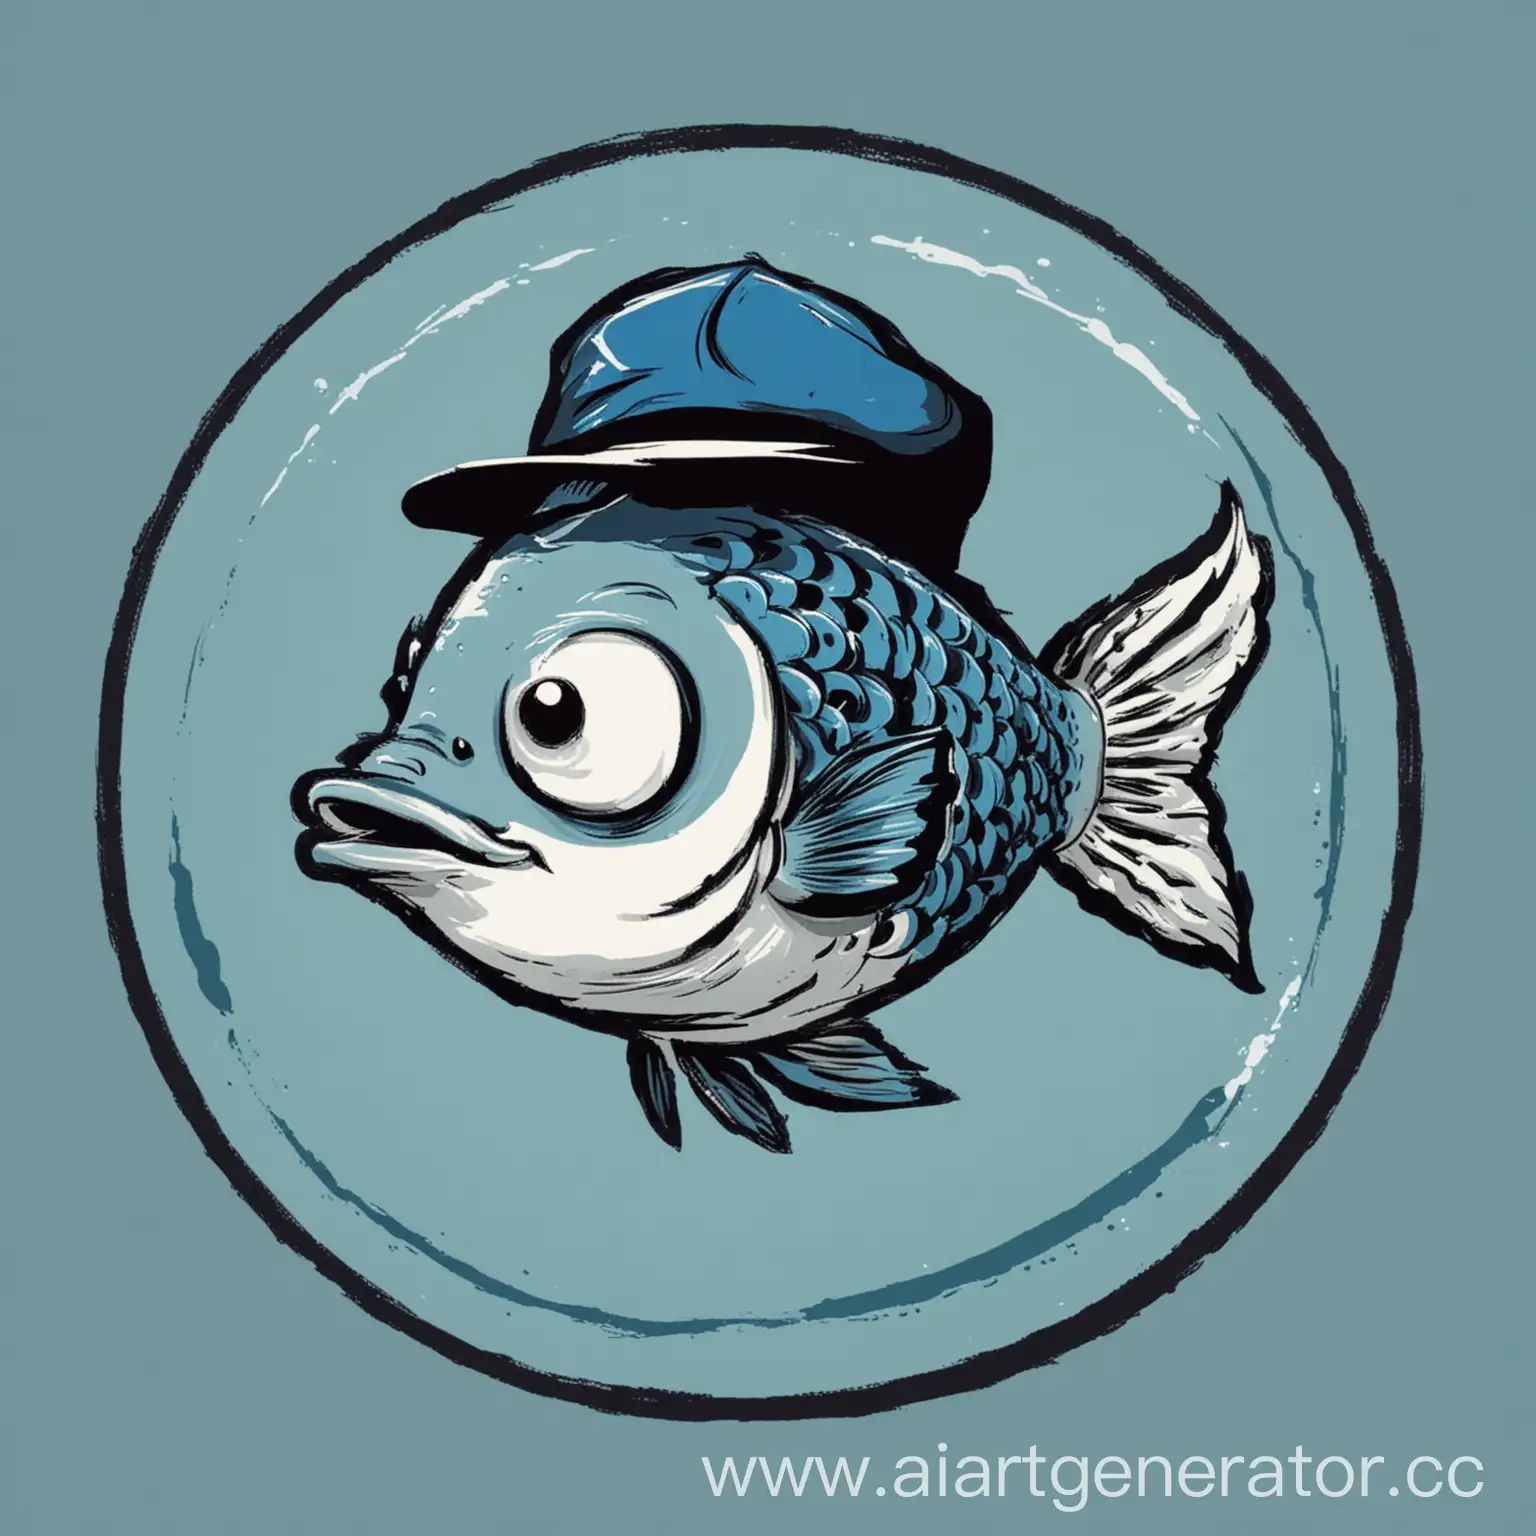 Cartoonish-Fish-with-Black-Cap-on-Blue-Background